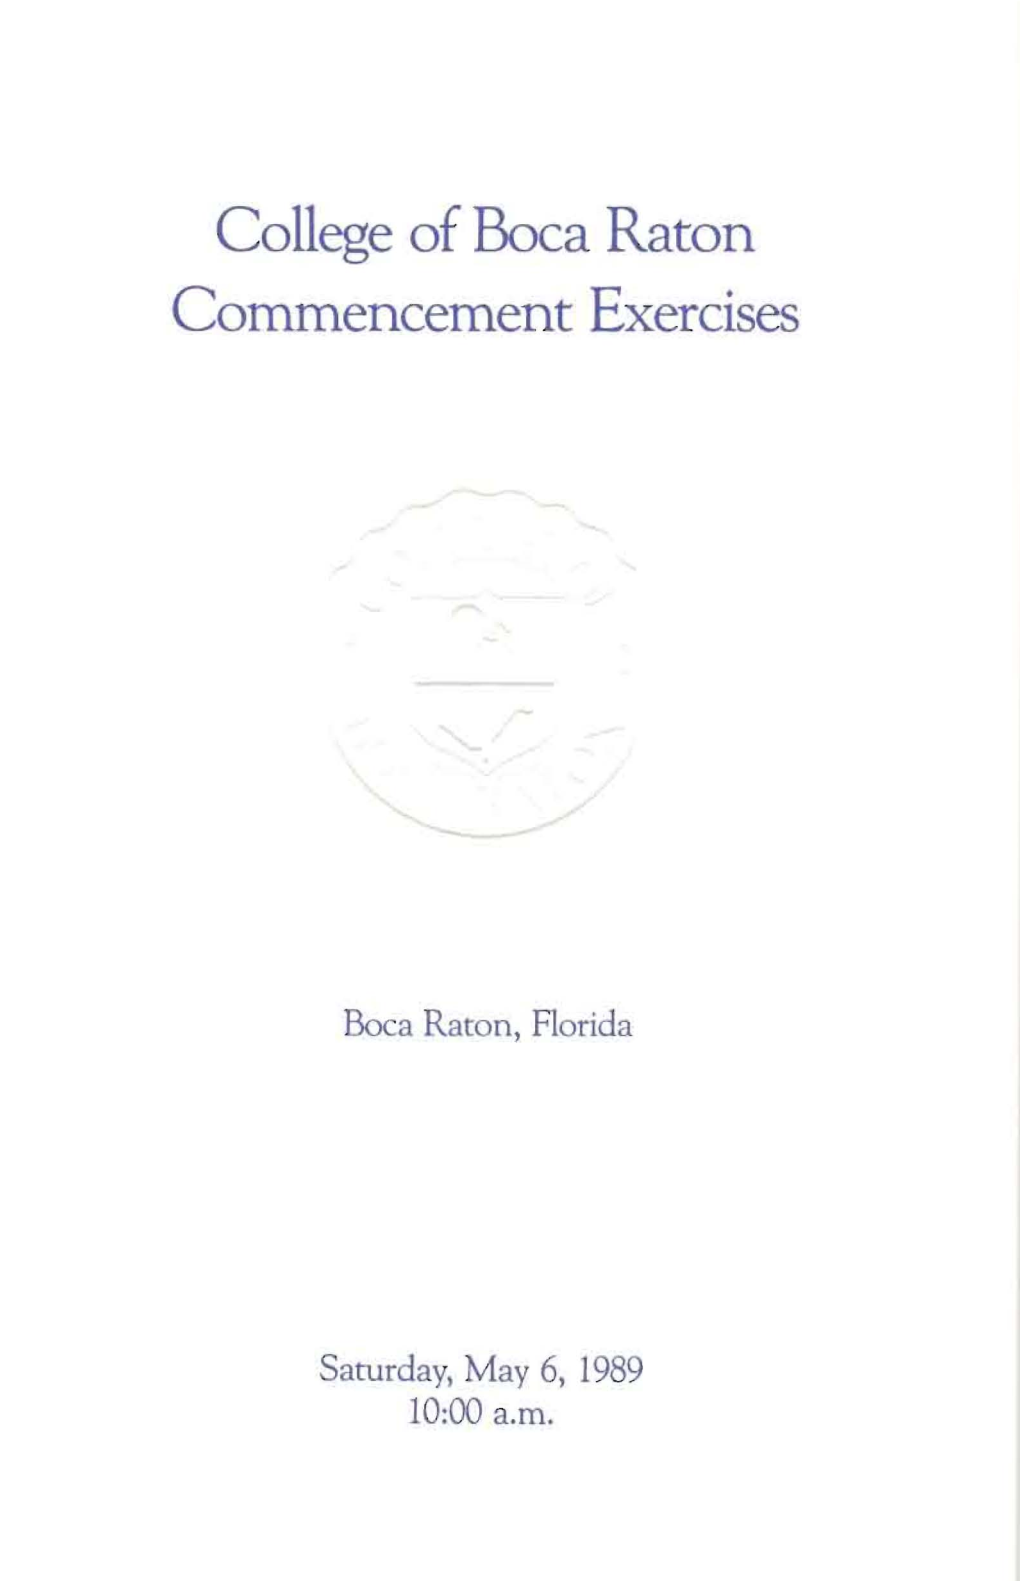 1989 College of Boca Raton Commencement